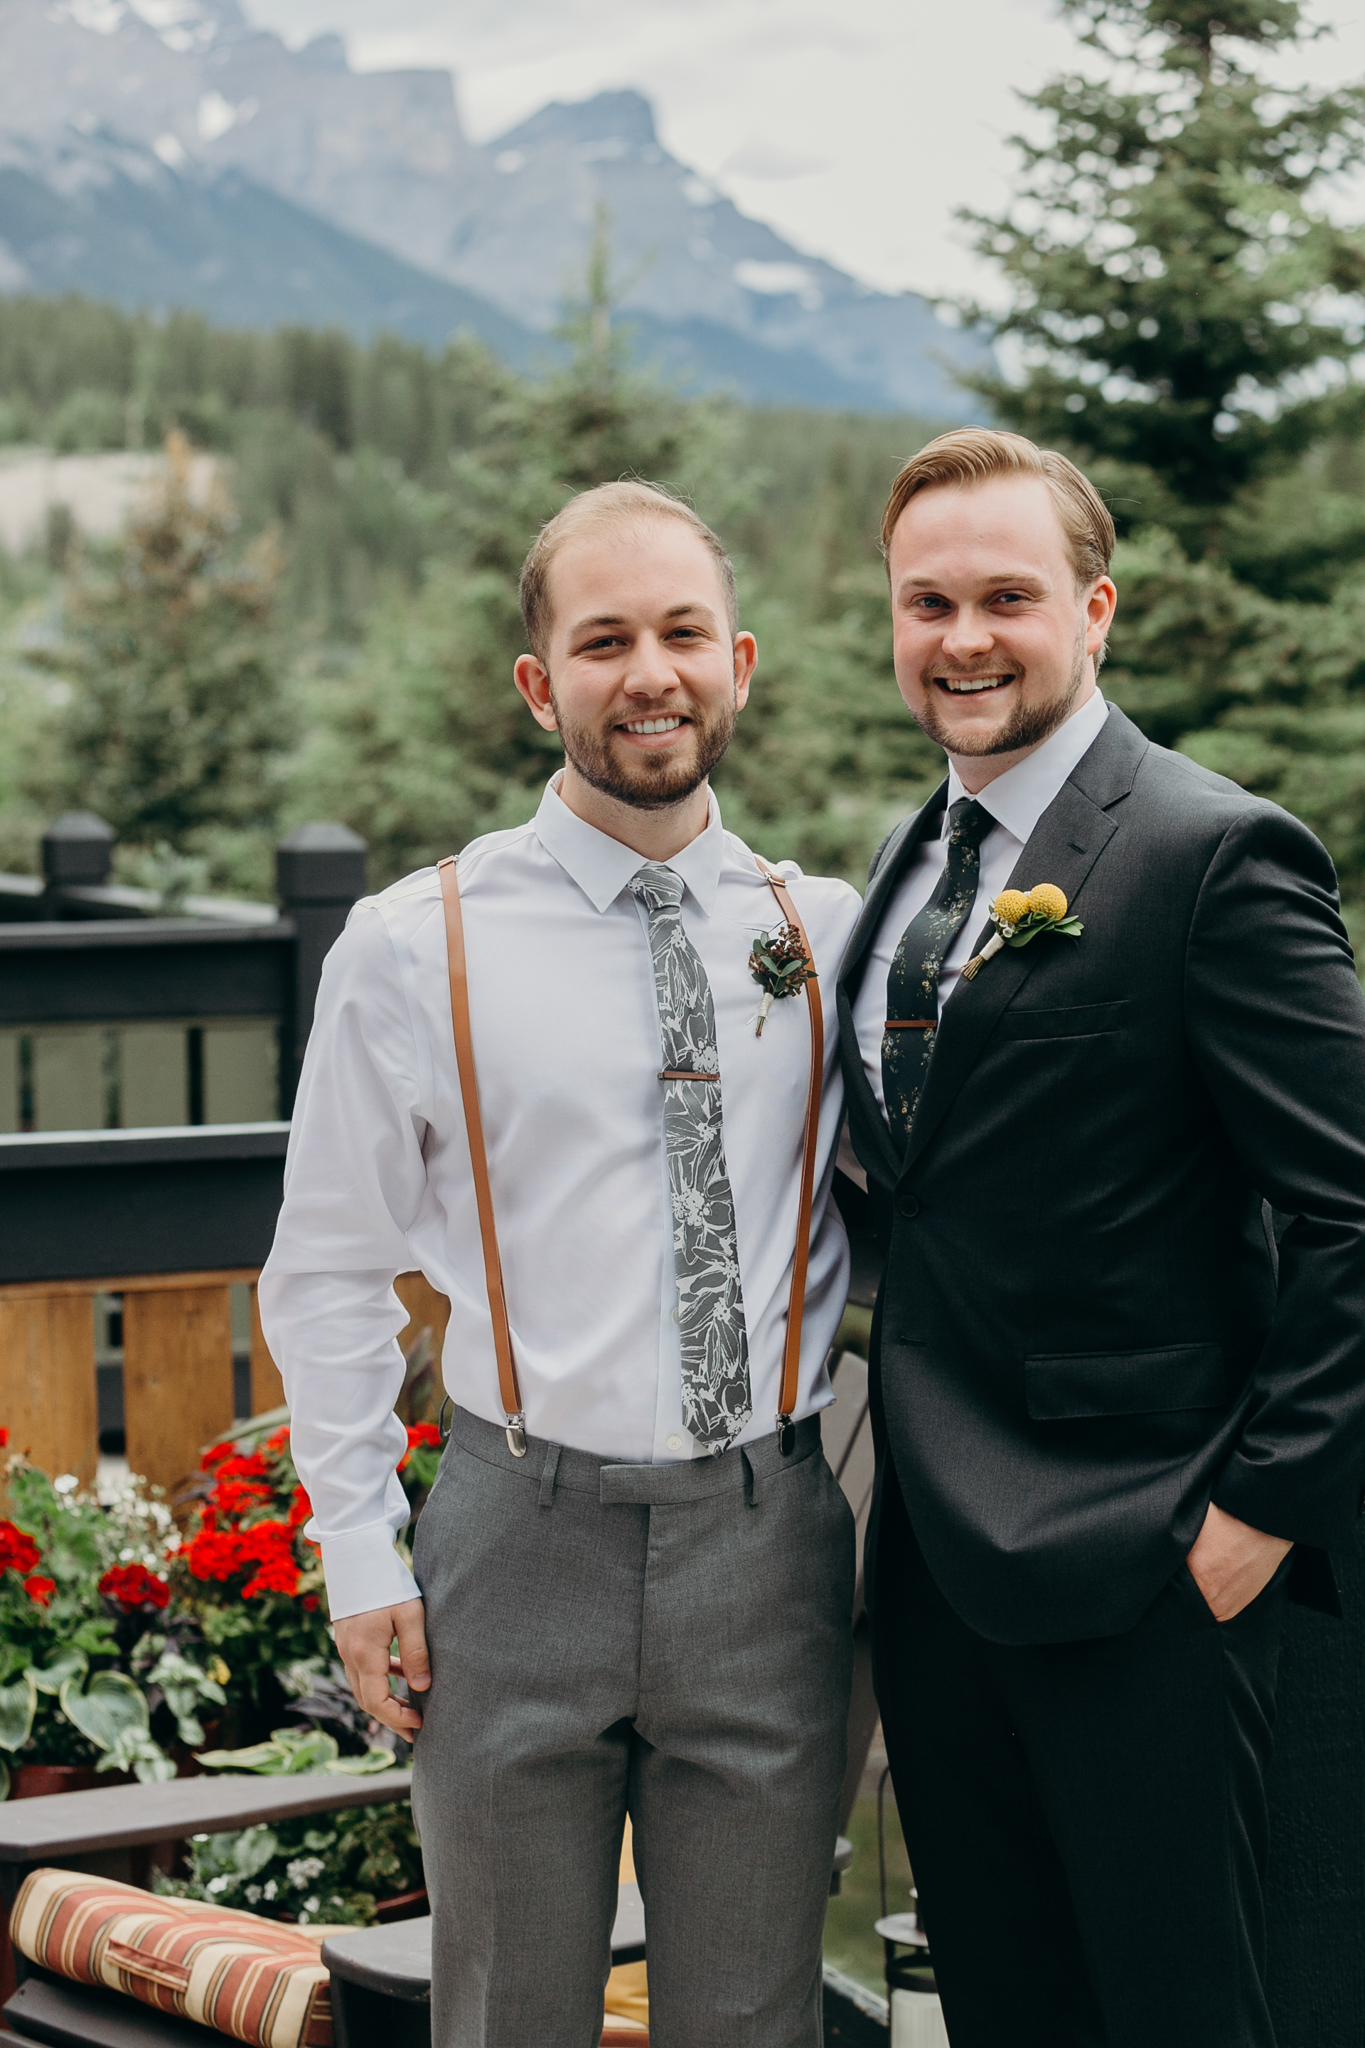 Groom and groomsman portrait smiling destination wedding photographer Canmore Banff